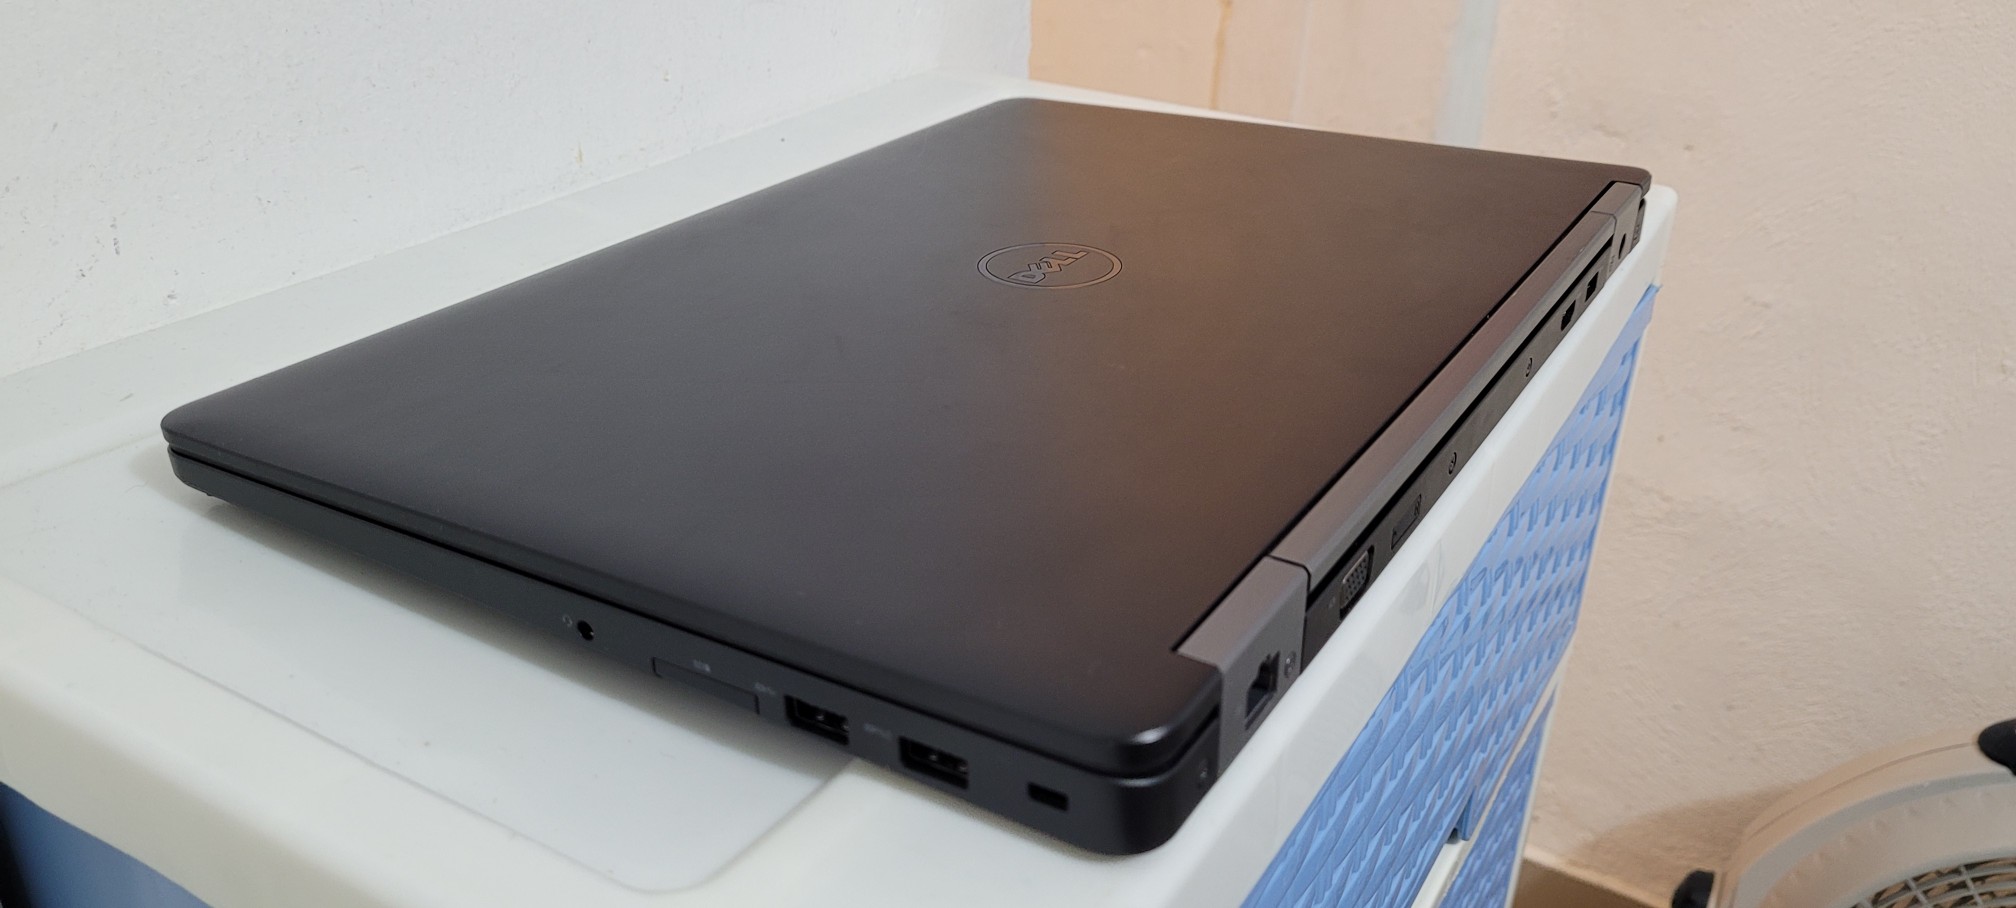 computadoras y laptops - laptop Dell 5470 14 Pulg Core i7 6ta Ram 16gb ddr4 Disco 256gb Video 8gb 2